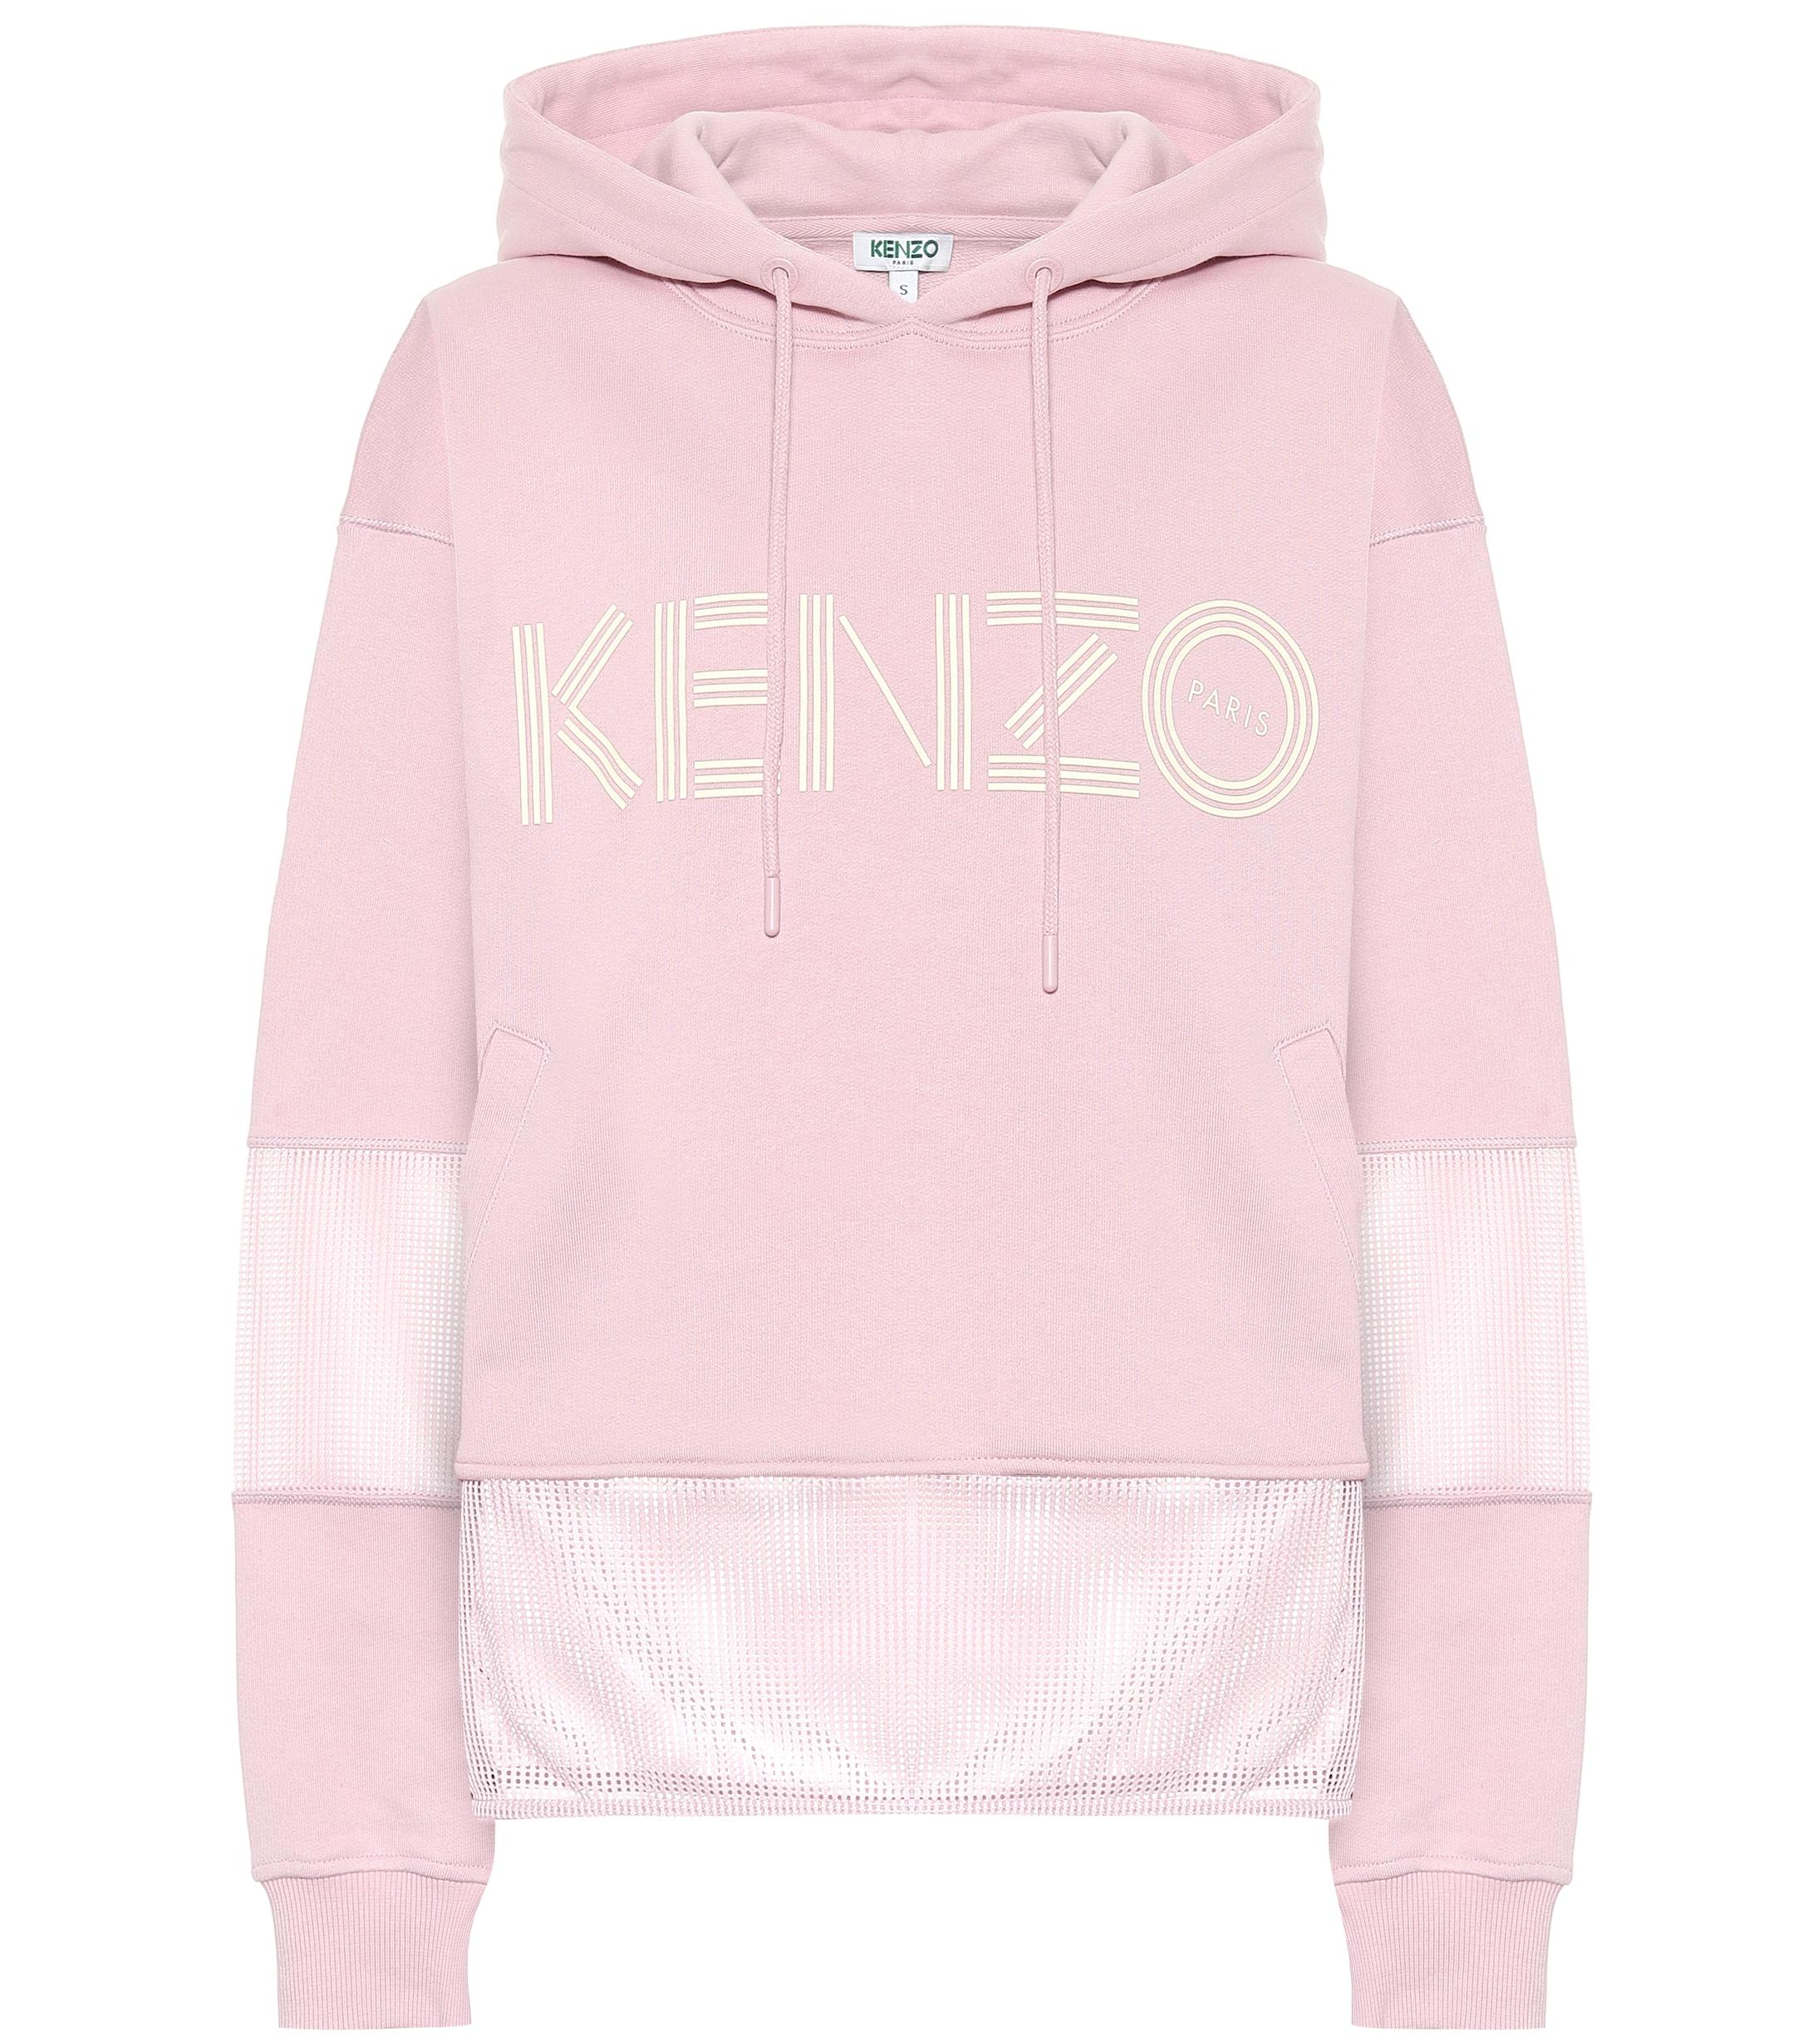 KENZO Logo Cotton Hoodie in Pink - Lyst